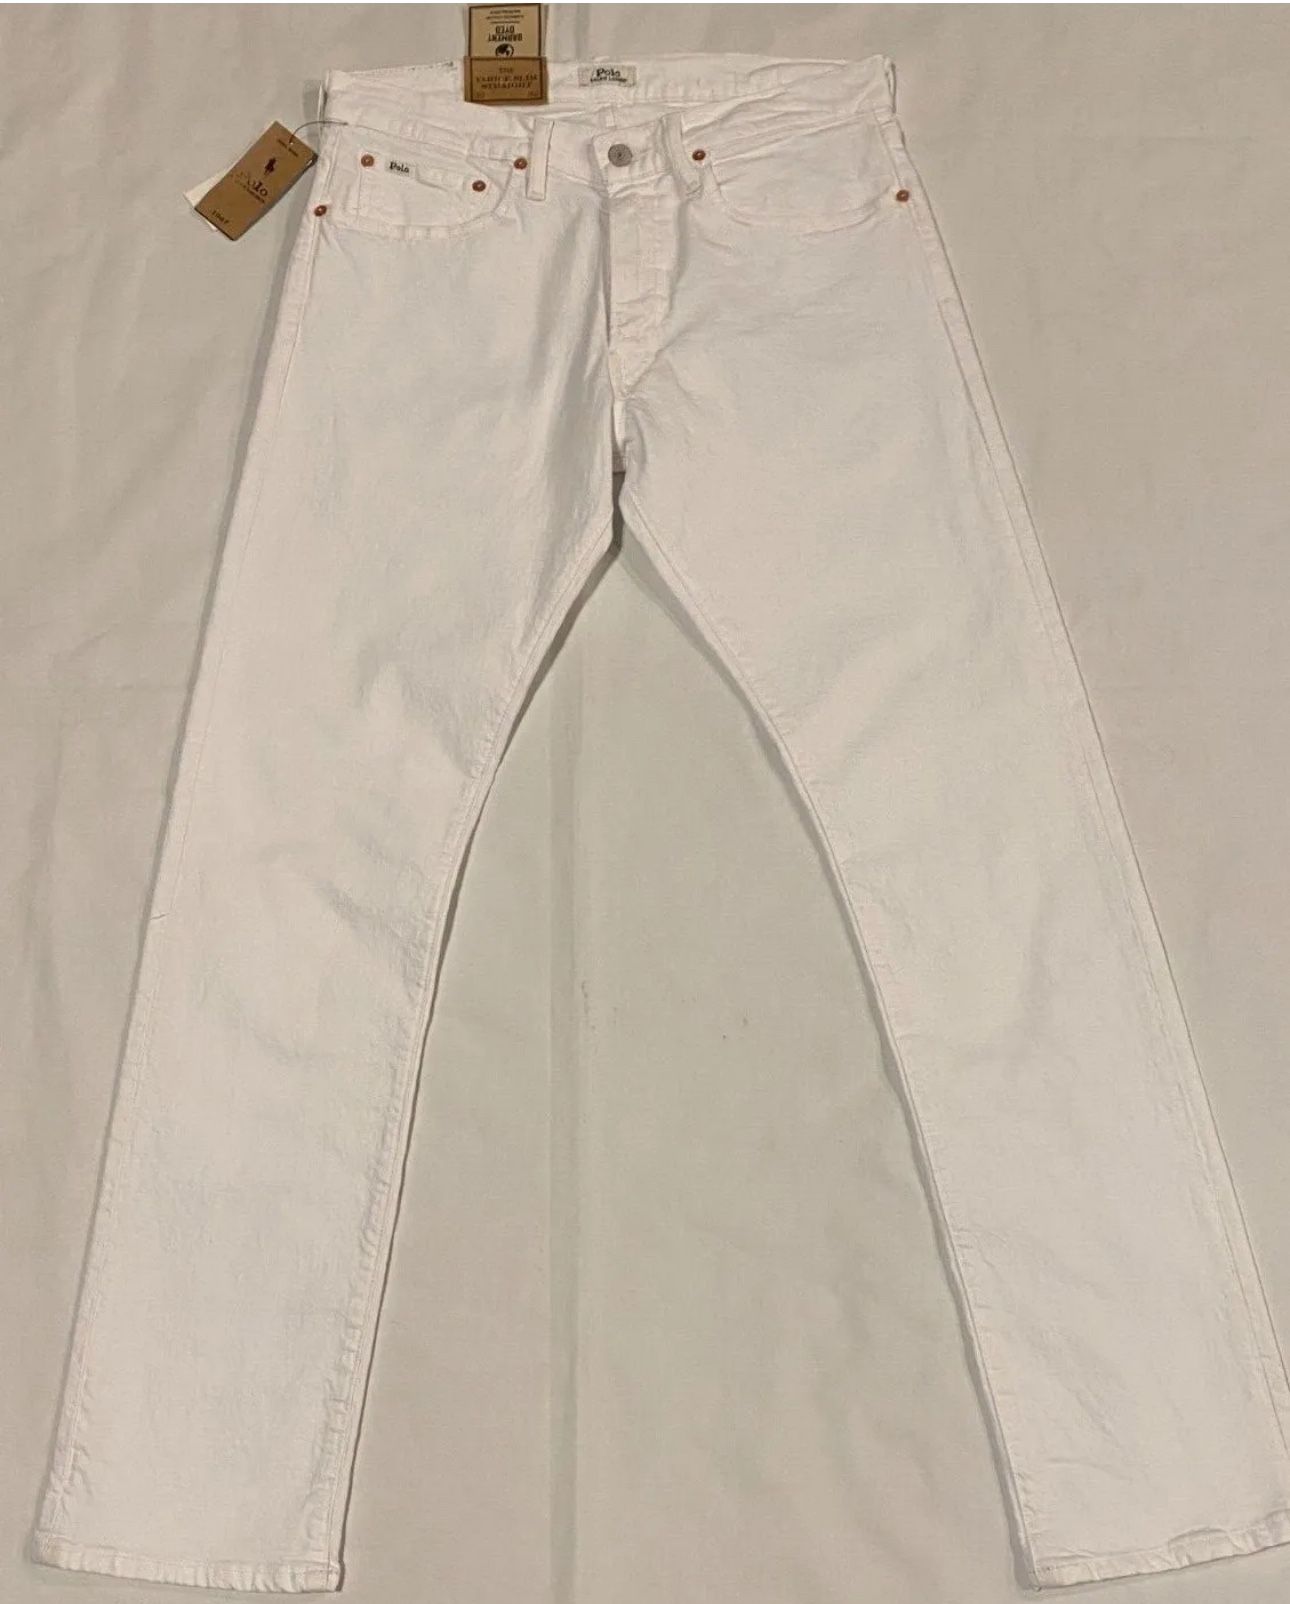 New Polo Ralph Lauren Varick Slim Straight Low Stretch White Jeans Size 33 Waist / 30 Inseam 